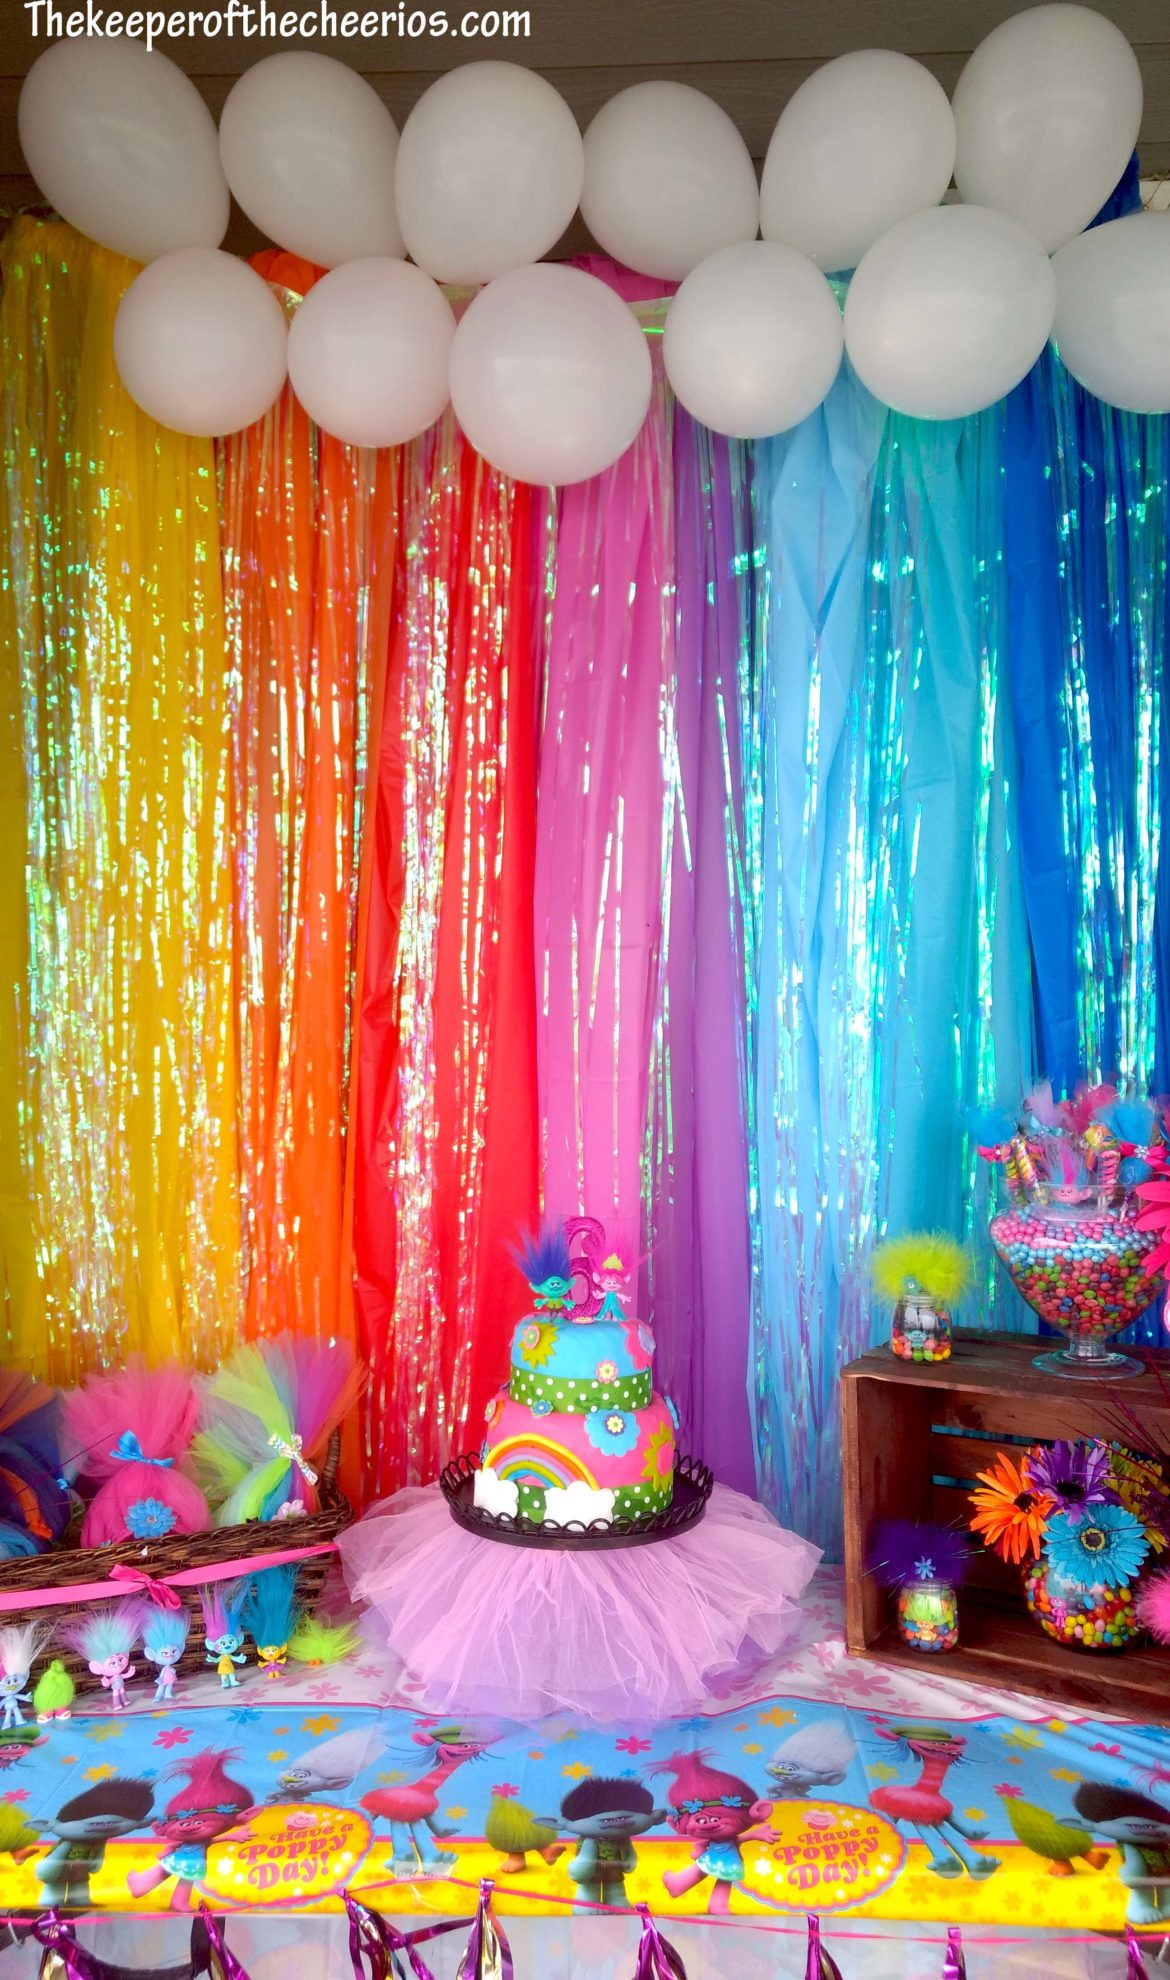 Trolls Birthday Party Ideas
 Trolls Birthday Party The Keeper of the Cheerios